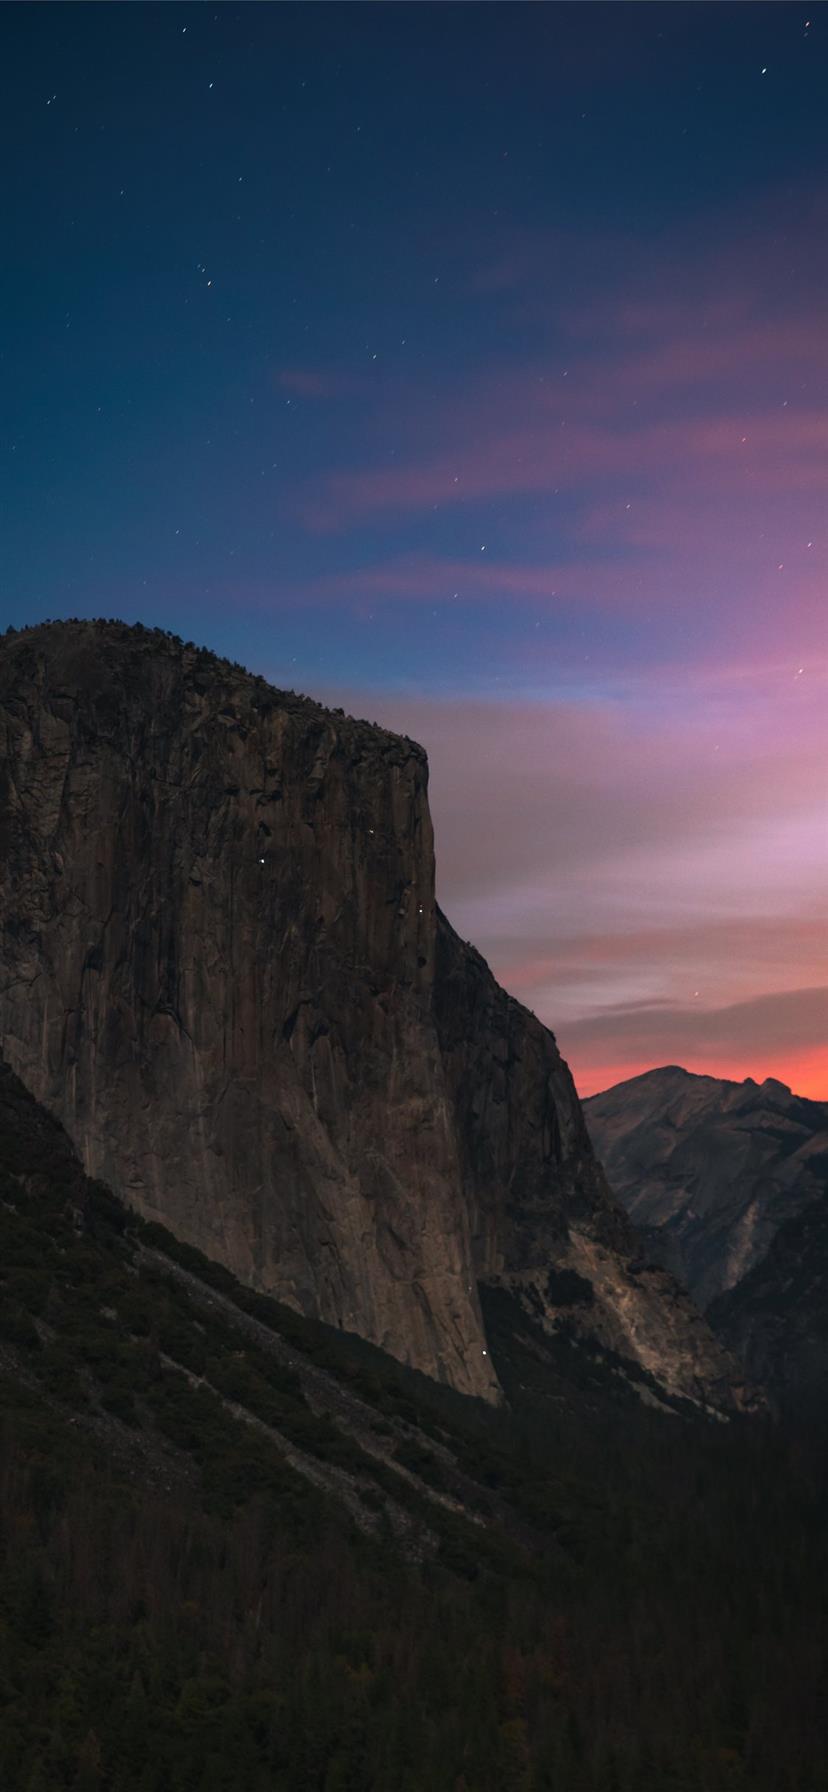 National Park Yosemite Mountain IPhone Wallpaper  IPhone Wallpapers  iPhone  Wallpapers